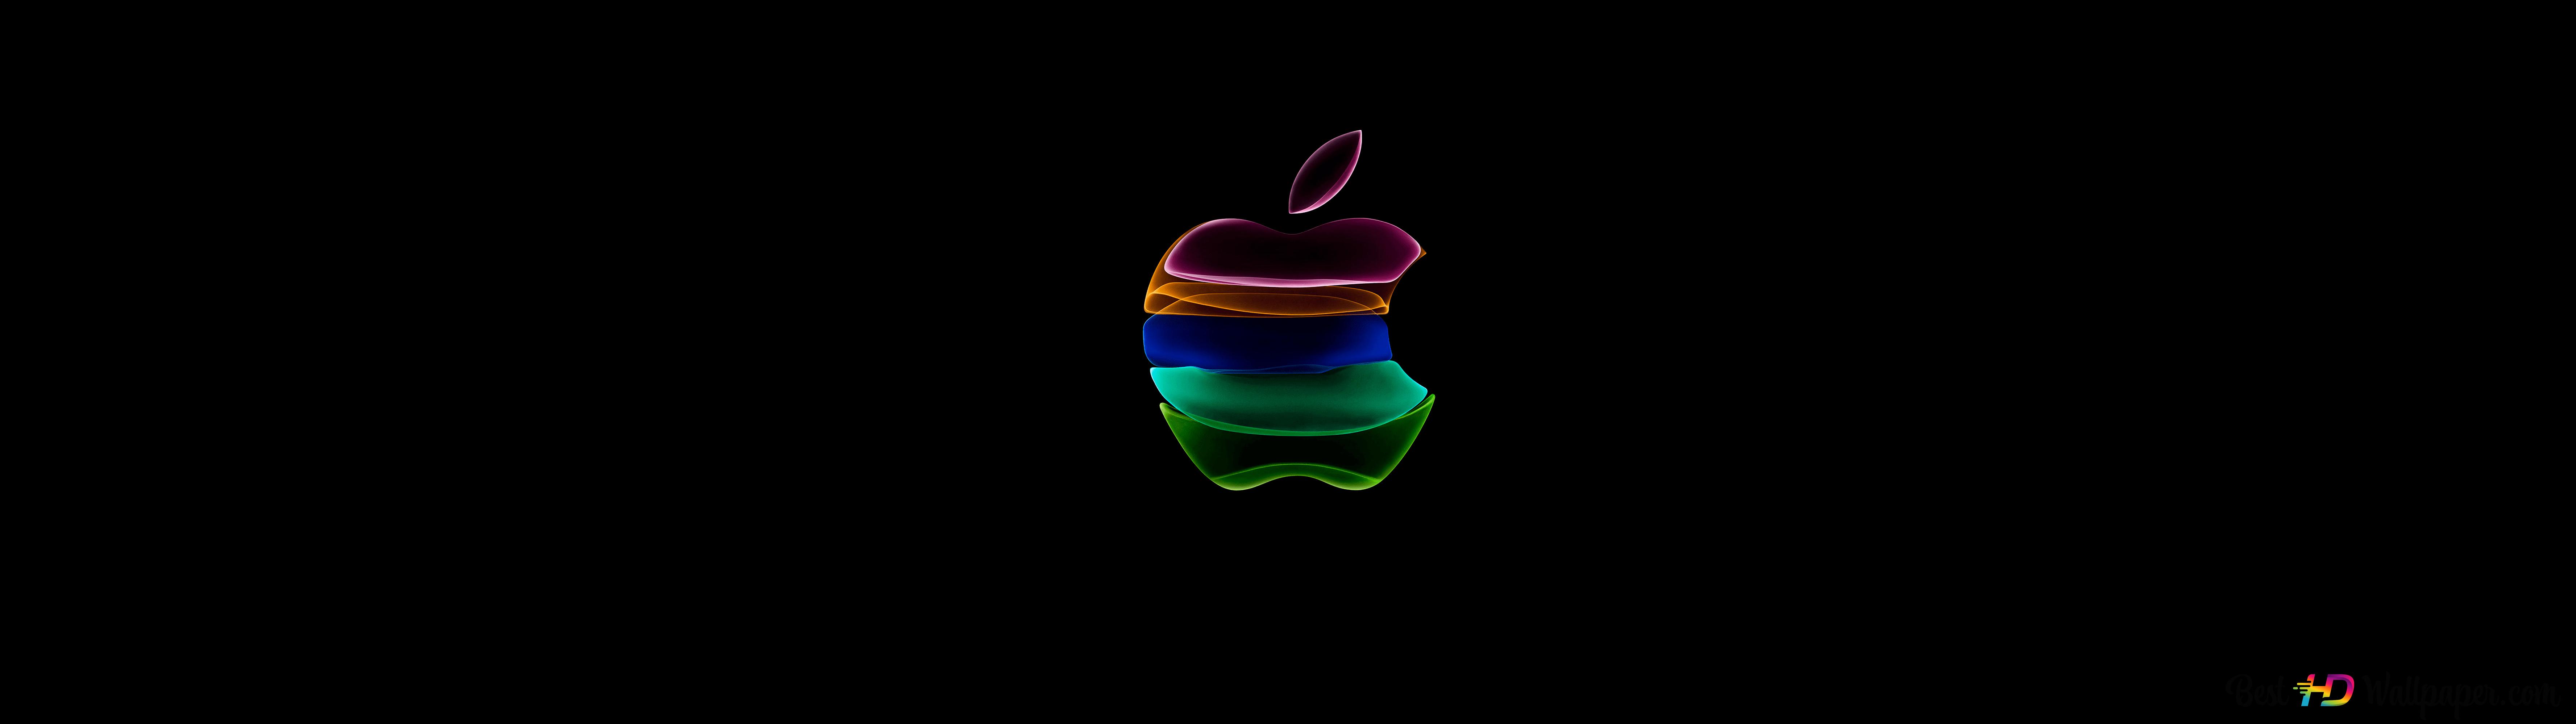 iPhone Apple Logo Black 8K wallpaper download